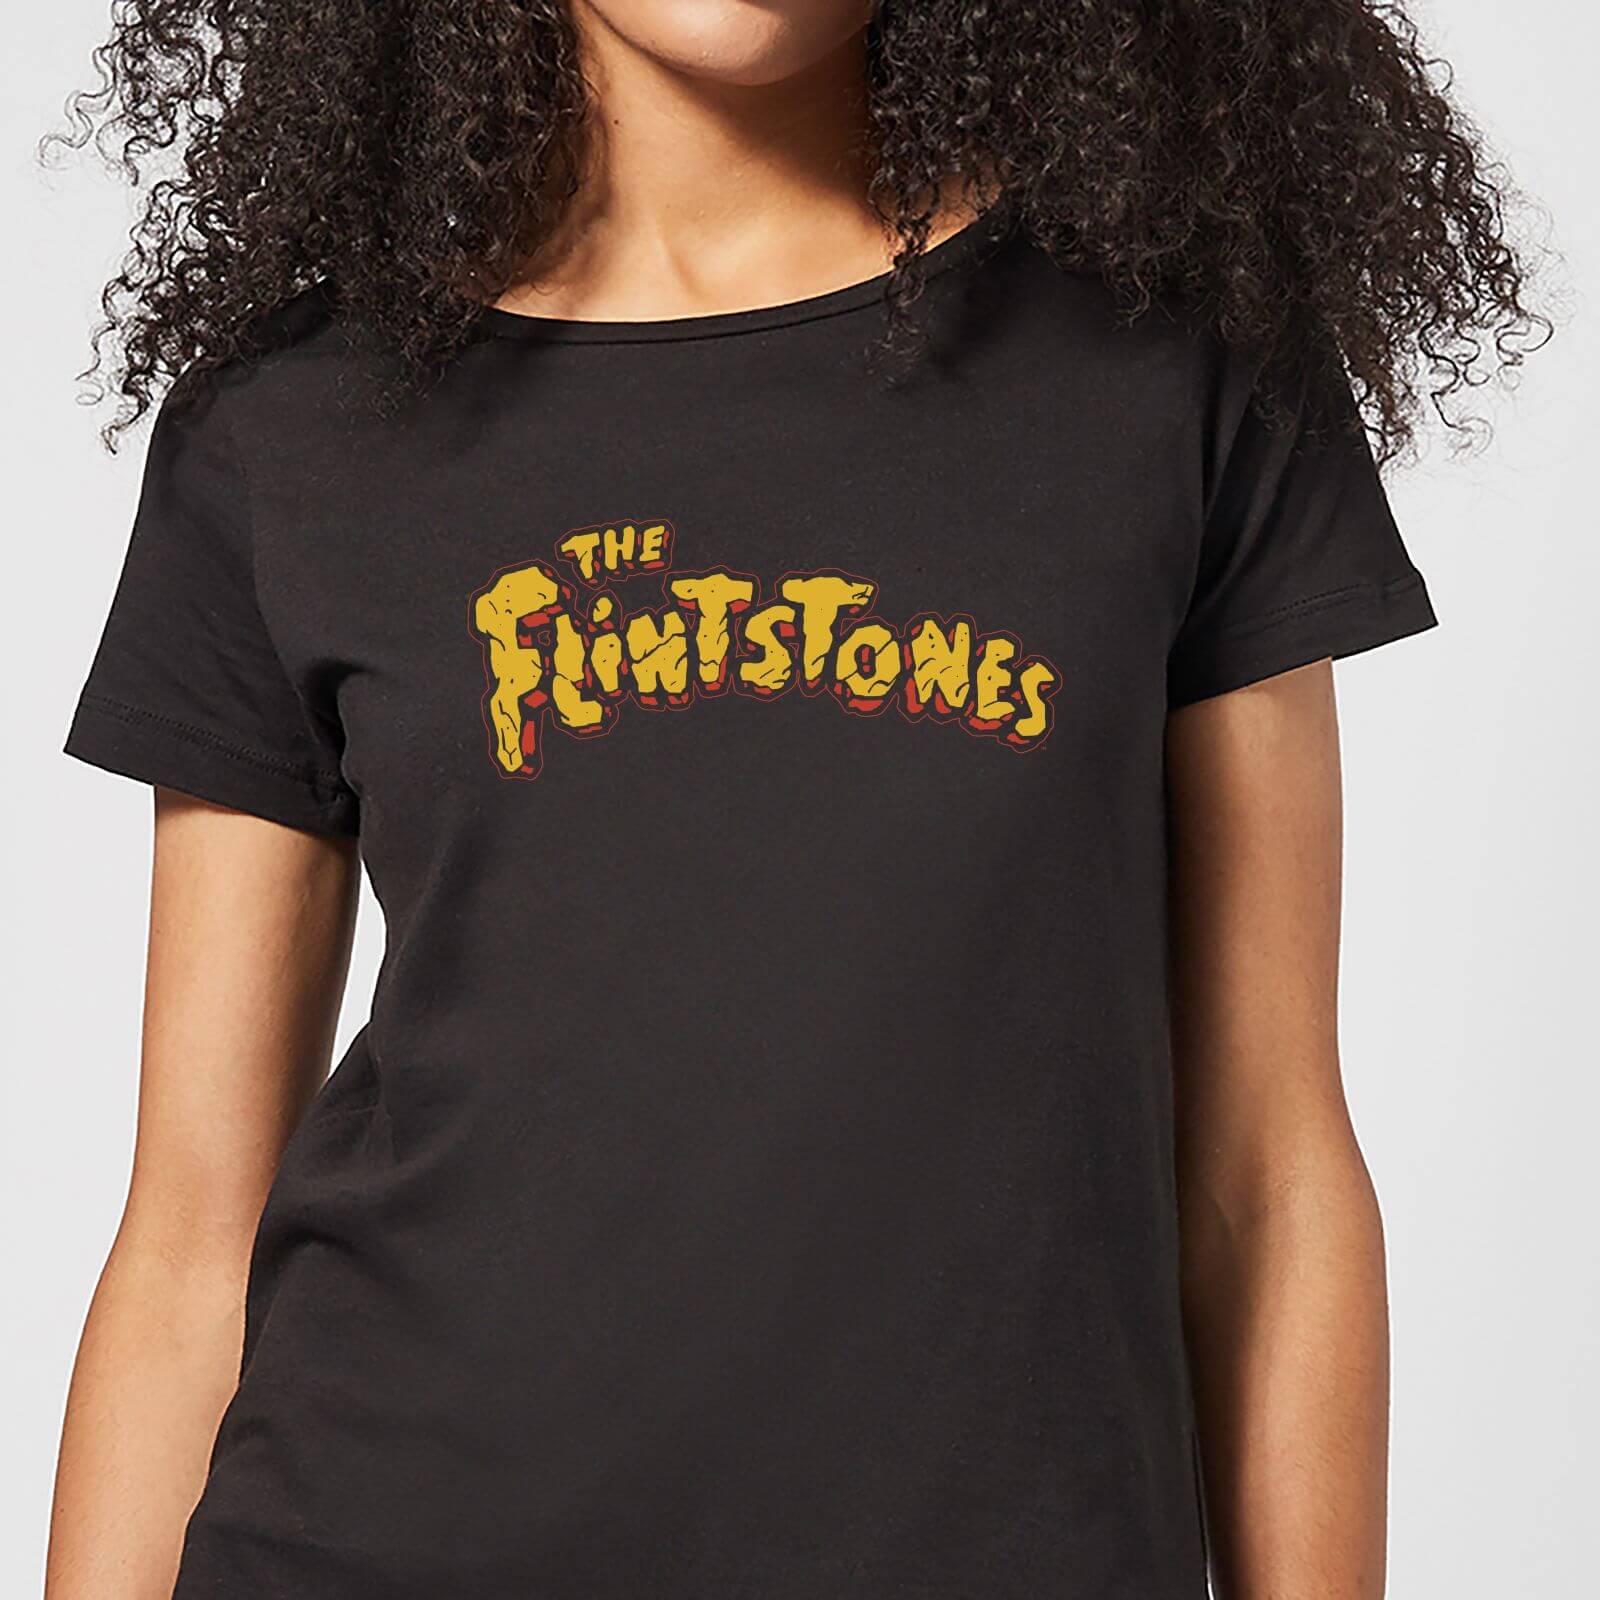 The Flintstones Logo Women's T-Shirt - Black - XXL - Black